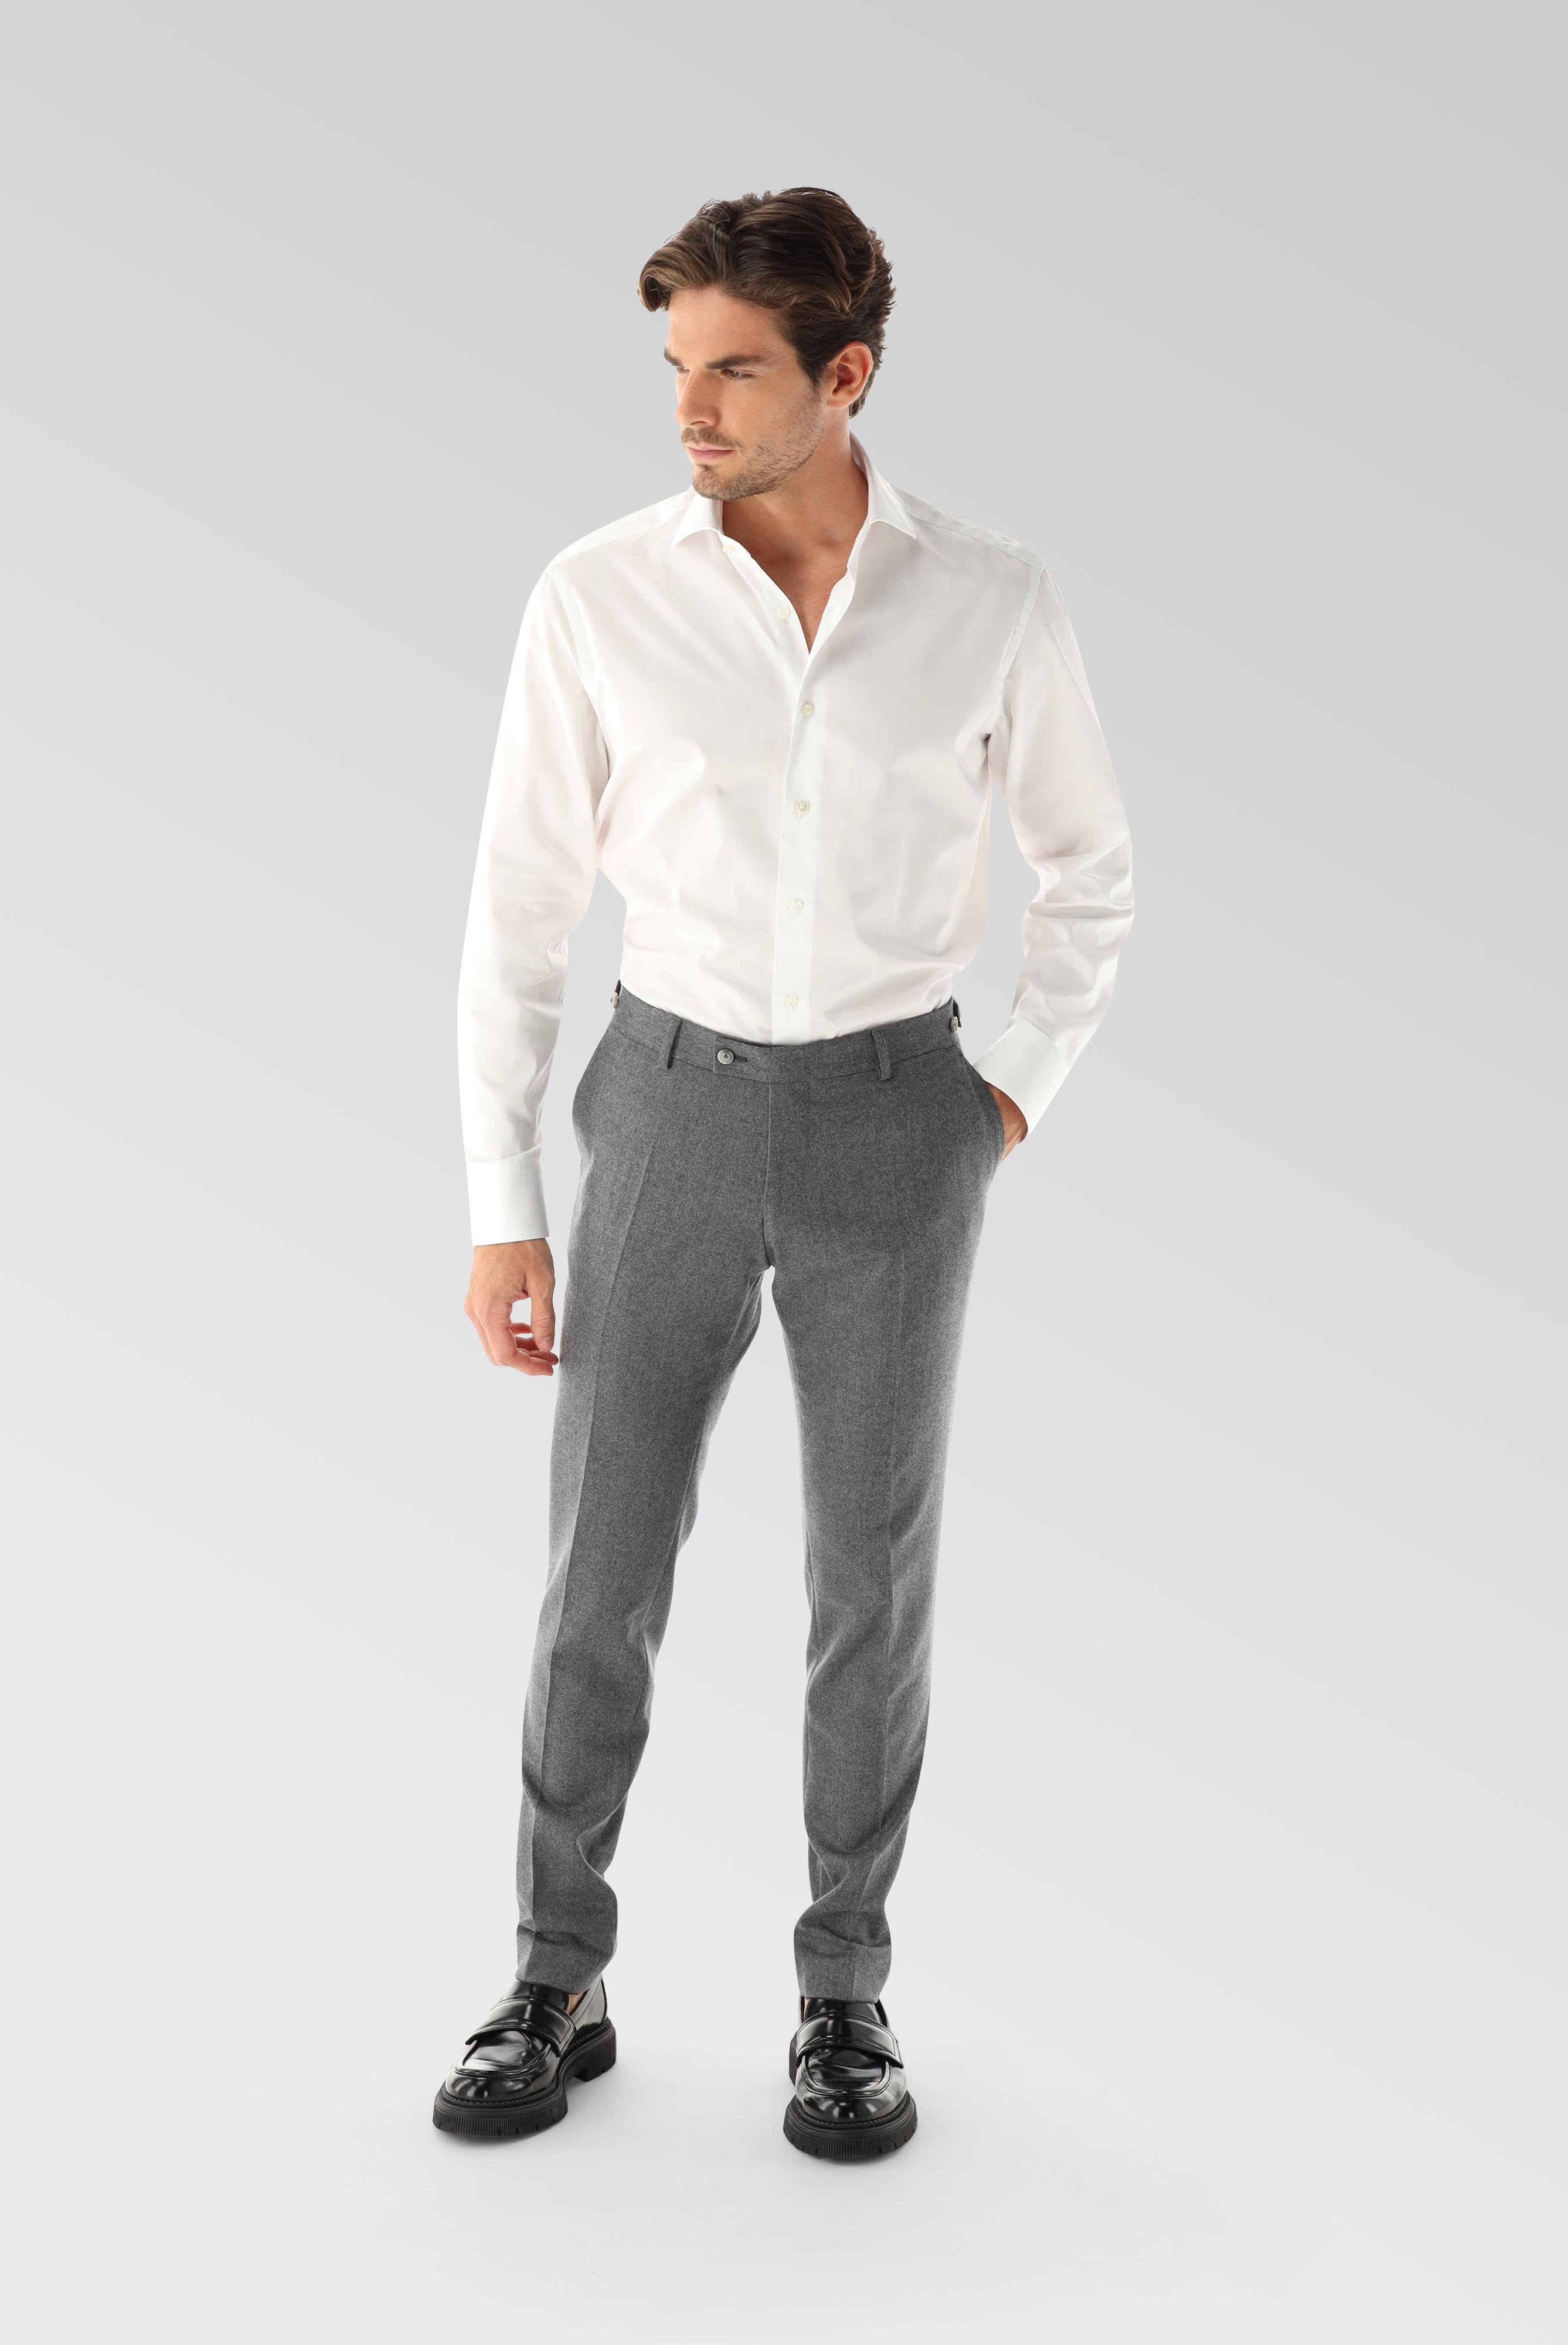 Meisterwerk Hemden+Businesshemd aus Baumwoll-Dobby Tailor Fit+20.2502.NV.130972.000.38